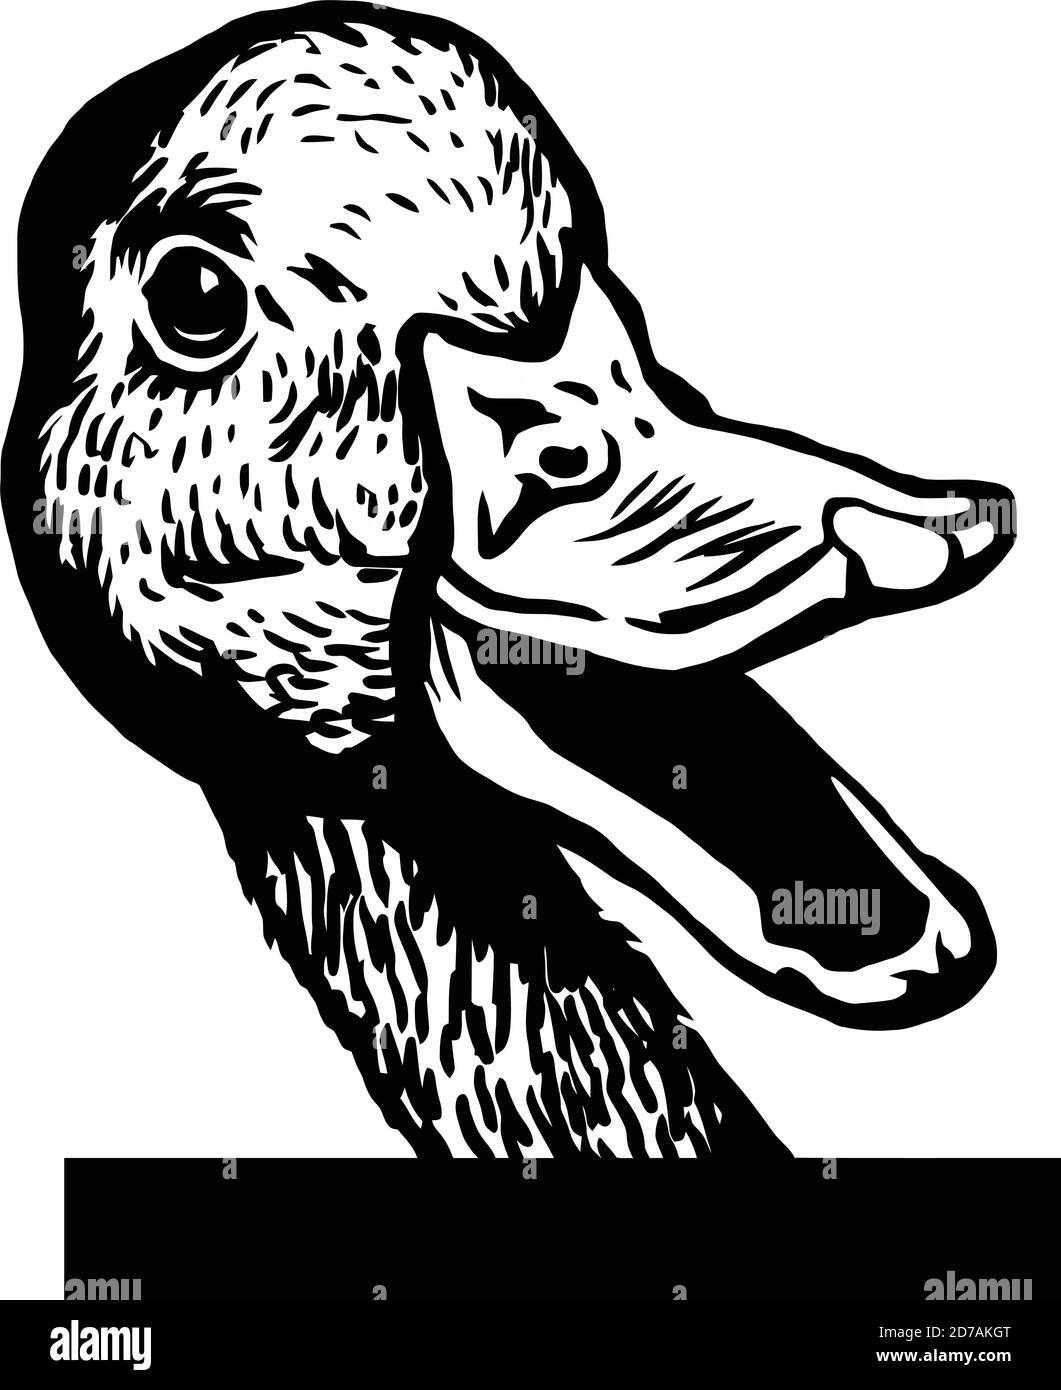 Peeking Duck - Cheerful Duck peeking out - face head isolated on white - vector stock Stock Vector